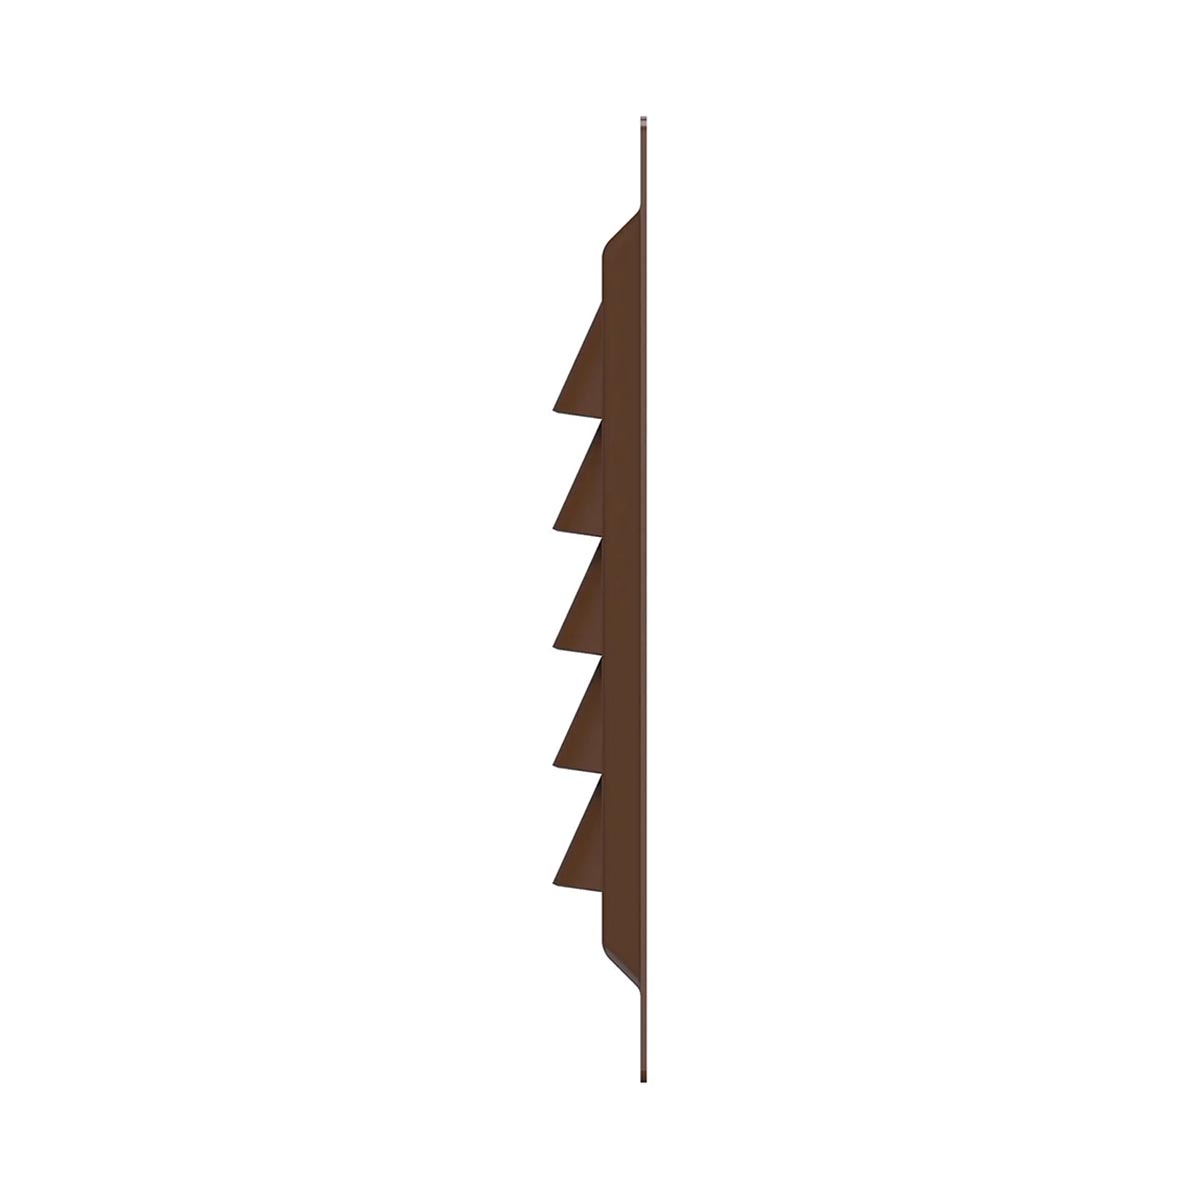 Решетка вентиляц. с сеткой 125 х 125 мм метал. коричневая (1/100) "эра" 1212мэ кор